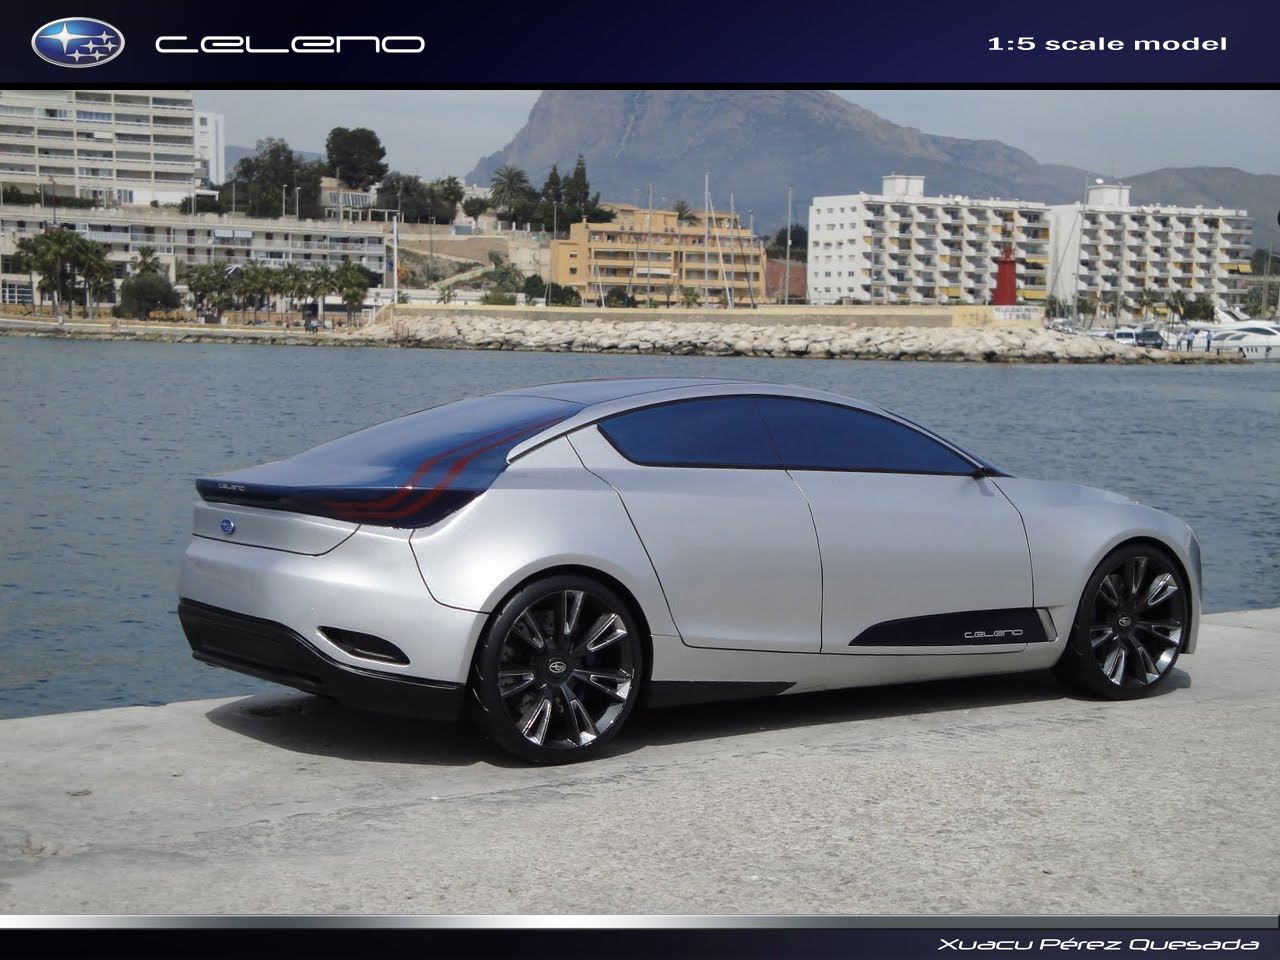 Subaru Celeno concept